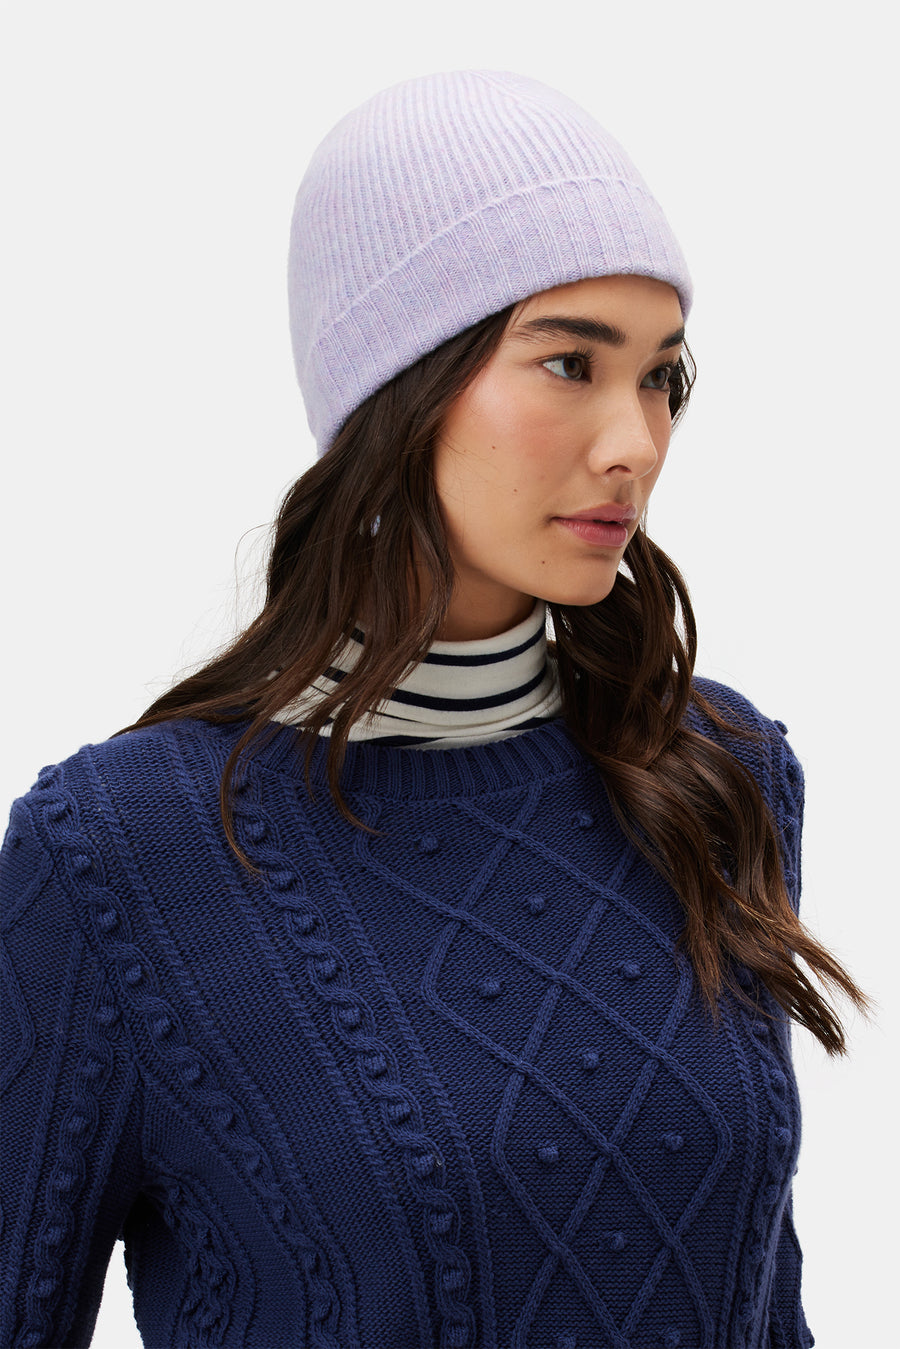 Faedra Organic Cotton Sweater - Navy